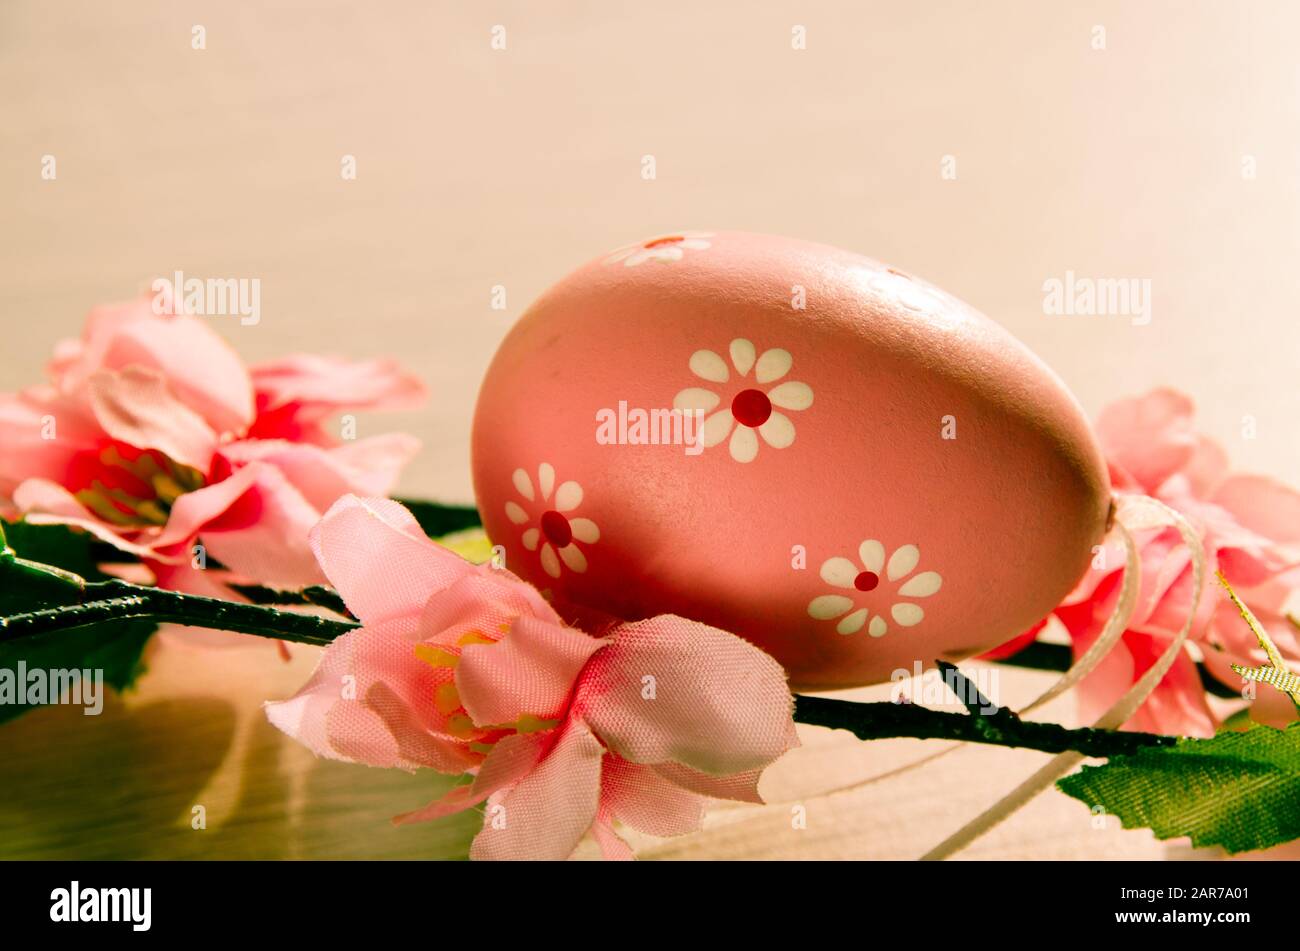 pink easter egg decoration image Stock Photo